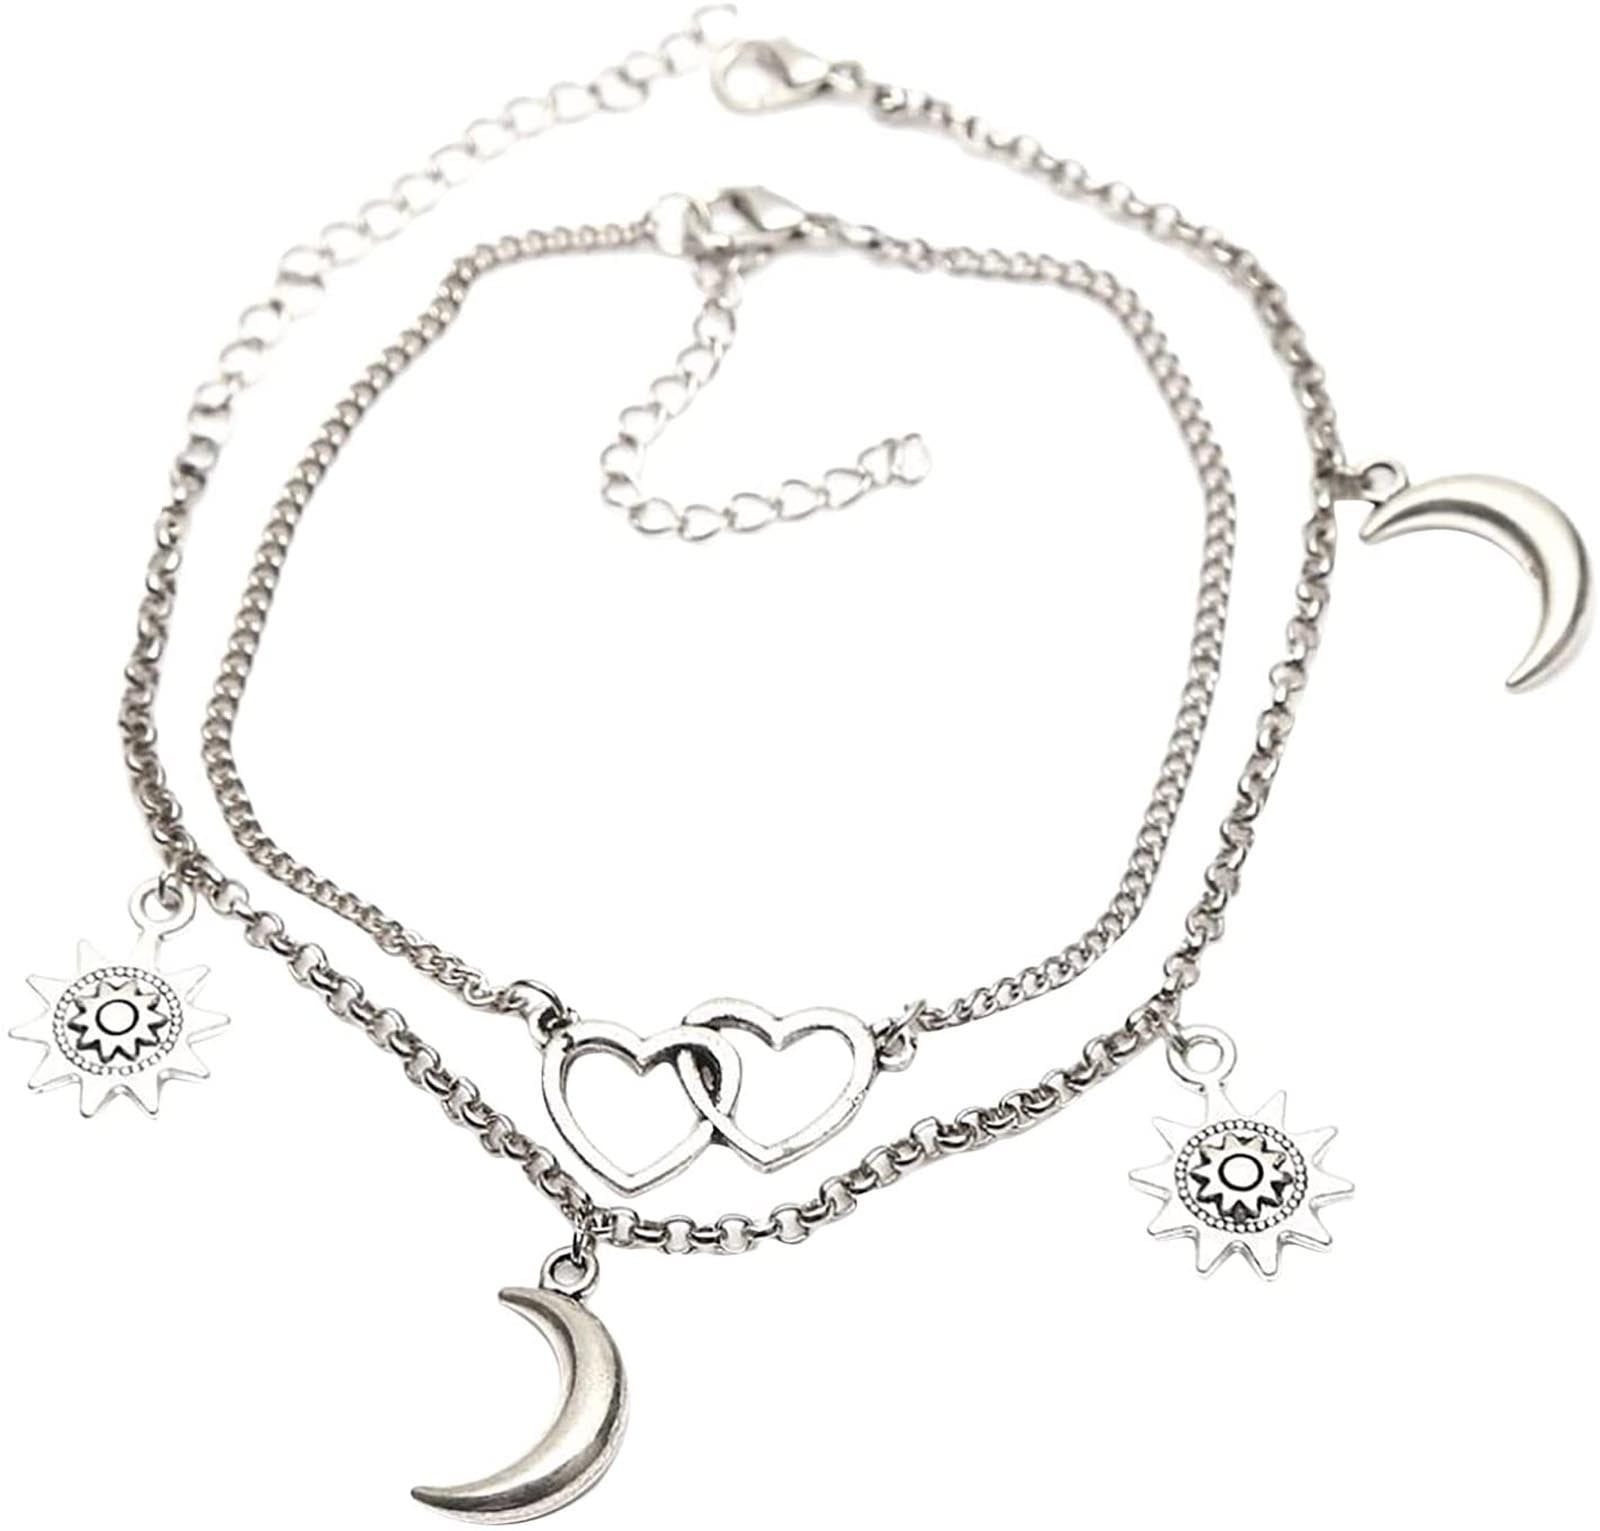 Details about   Vintage Beach Jewelry Bracelet Elephant Anklet Multilayer Chain Pendant